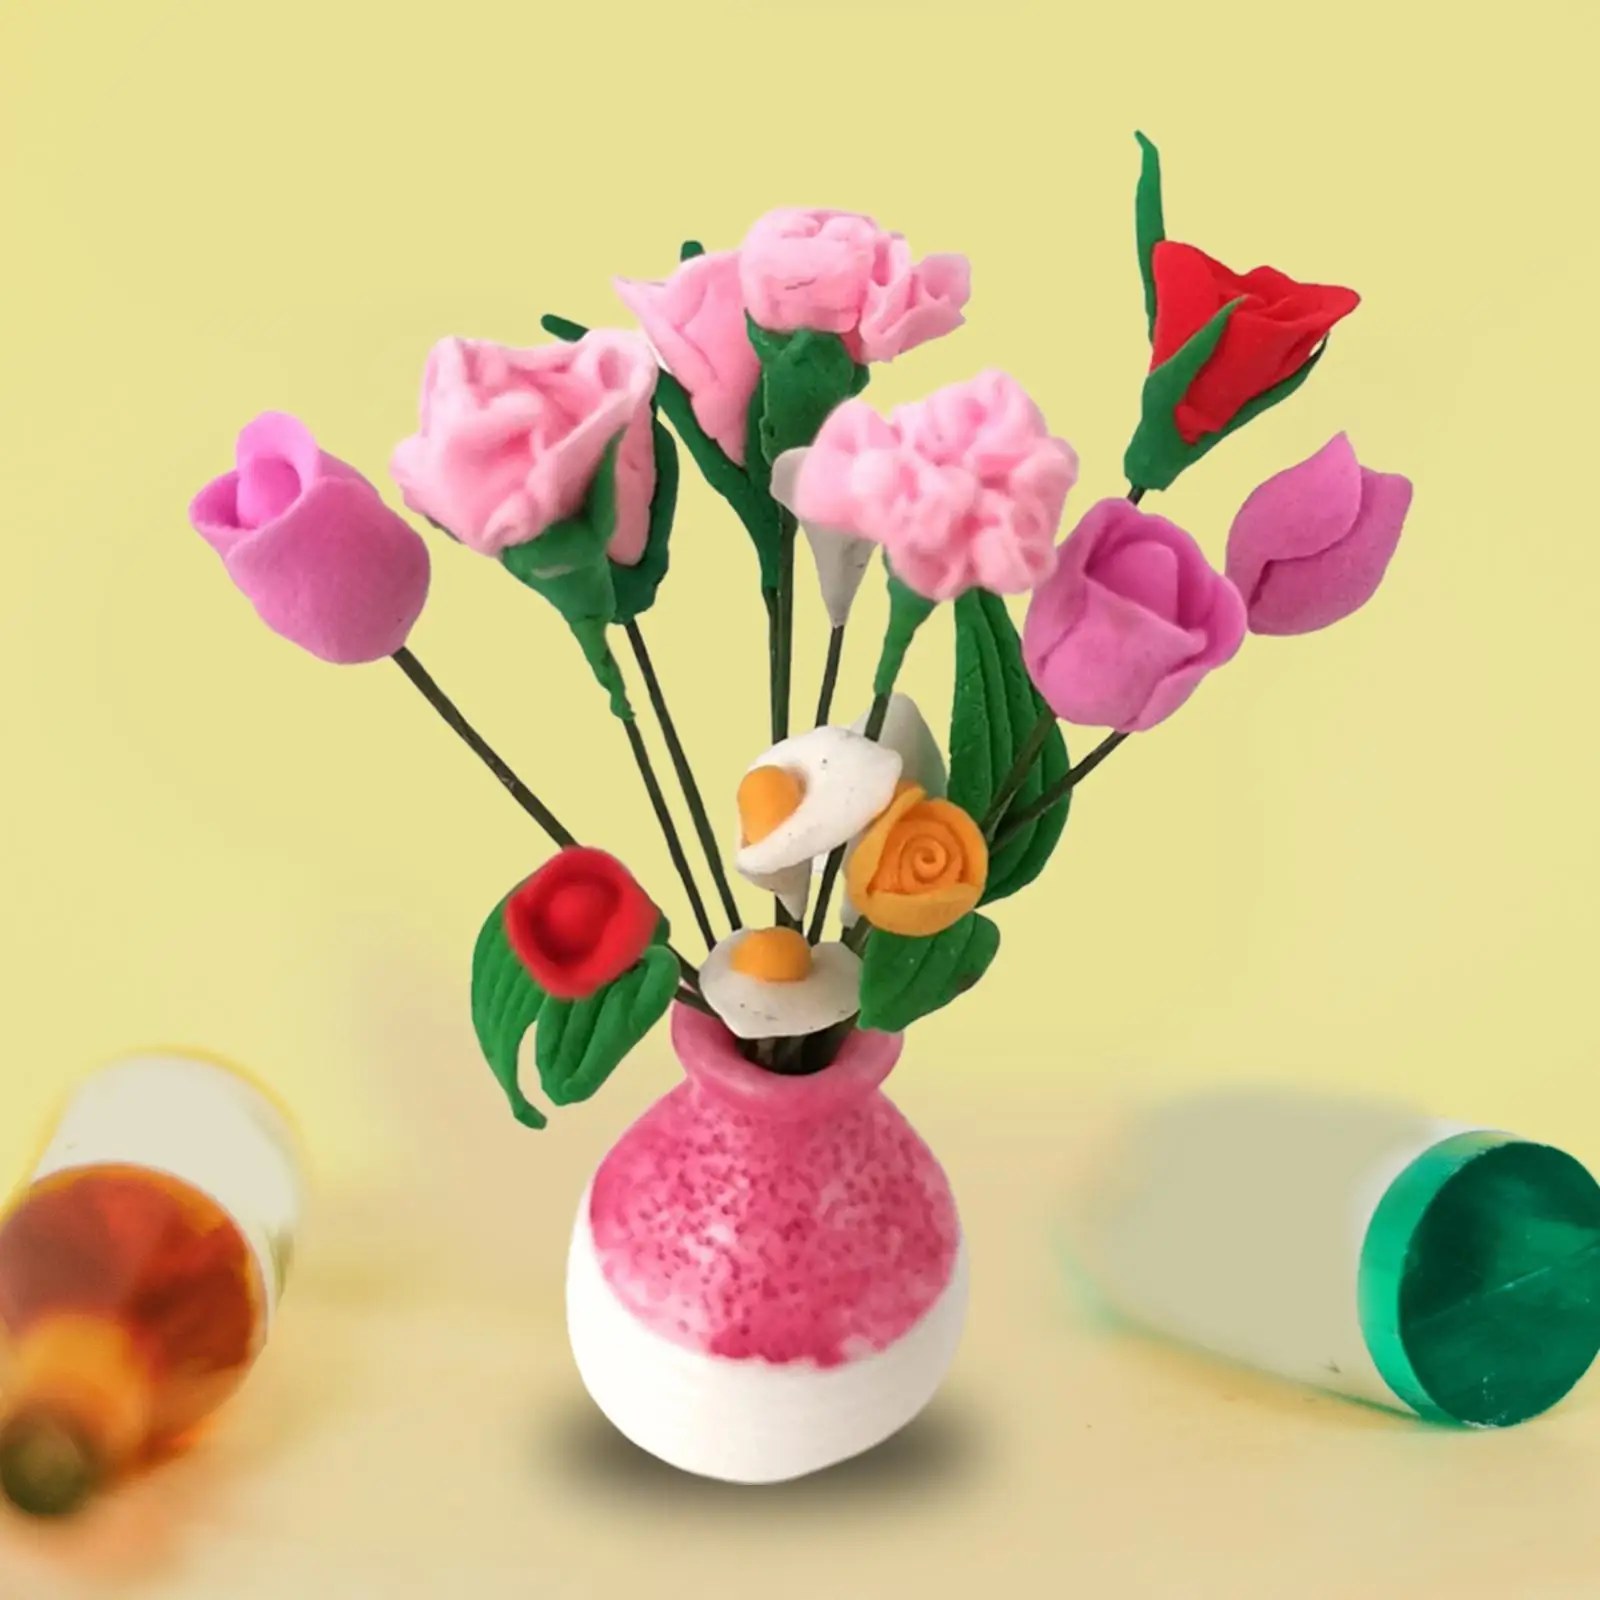 Miniature Flower Pretend Play Tiny Bonsai Model 1:12 Scale Dollhouse Flowes for Fairy Garden Dollhouse Accessories Diorama Decor